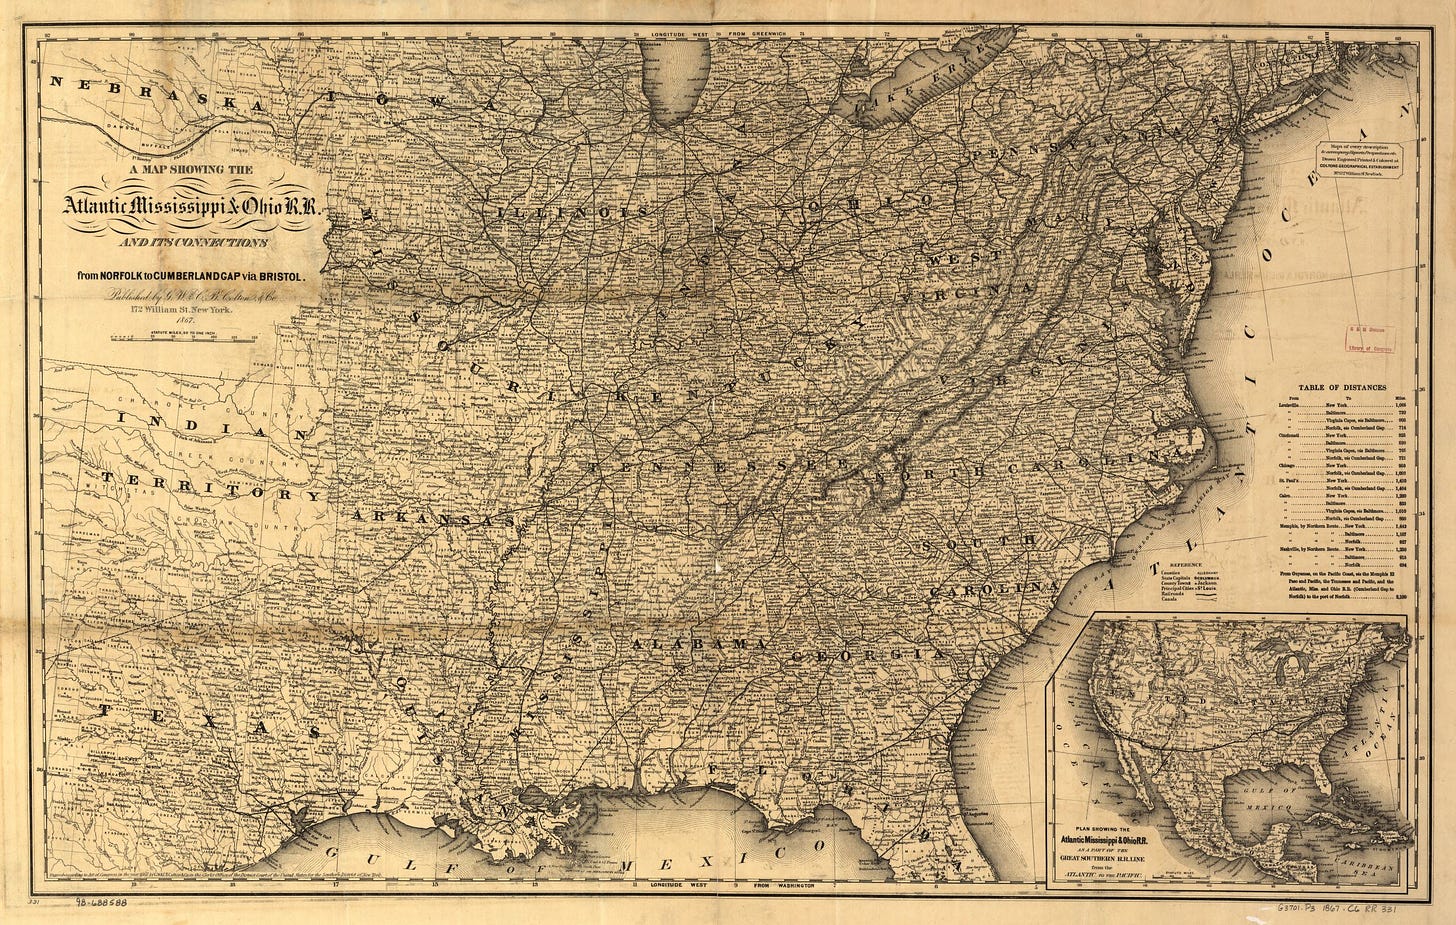 Atlantic, Mississippi and Ohio Railroad - Wikipedia